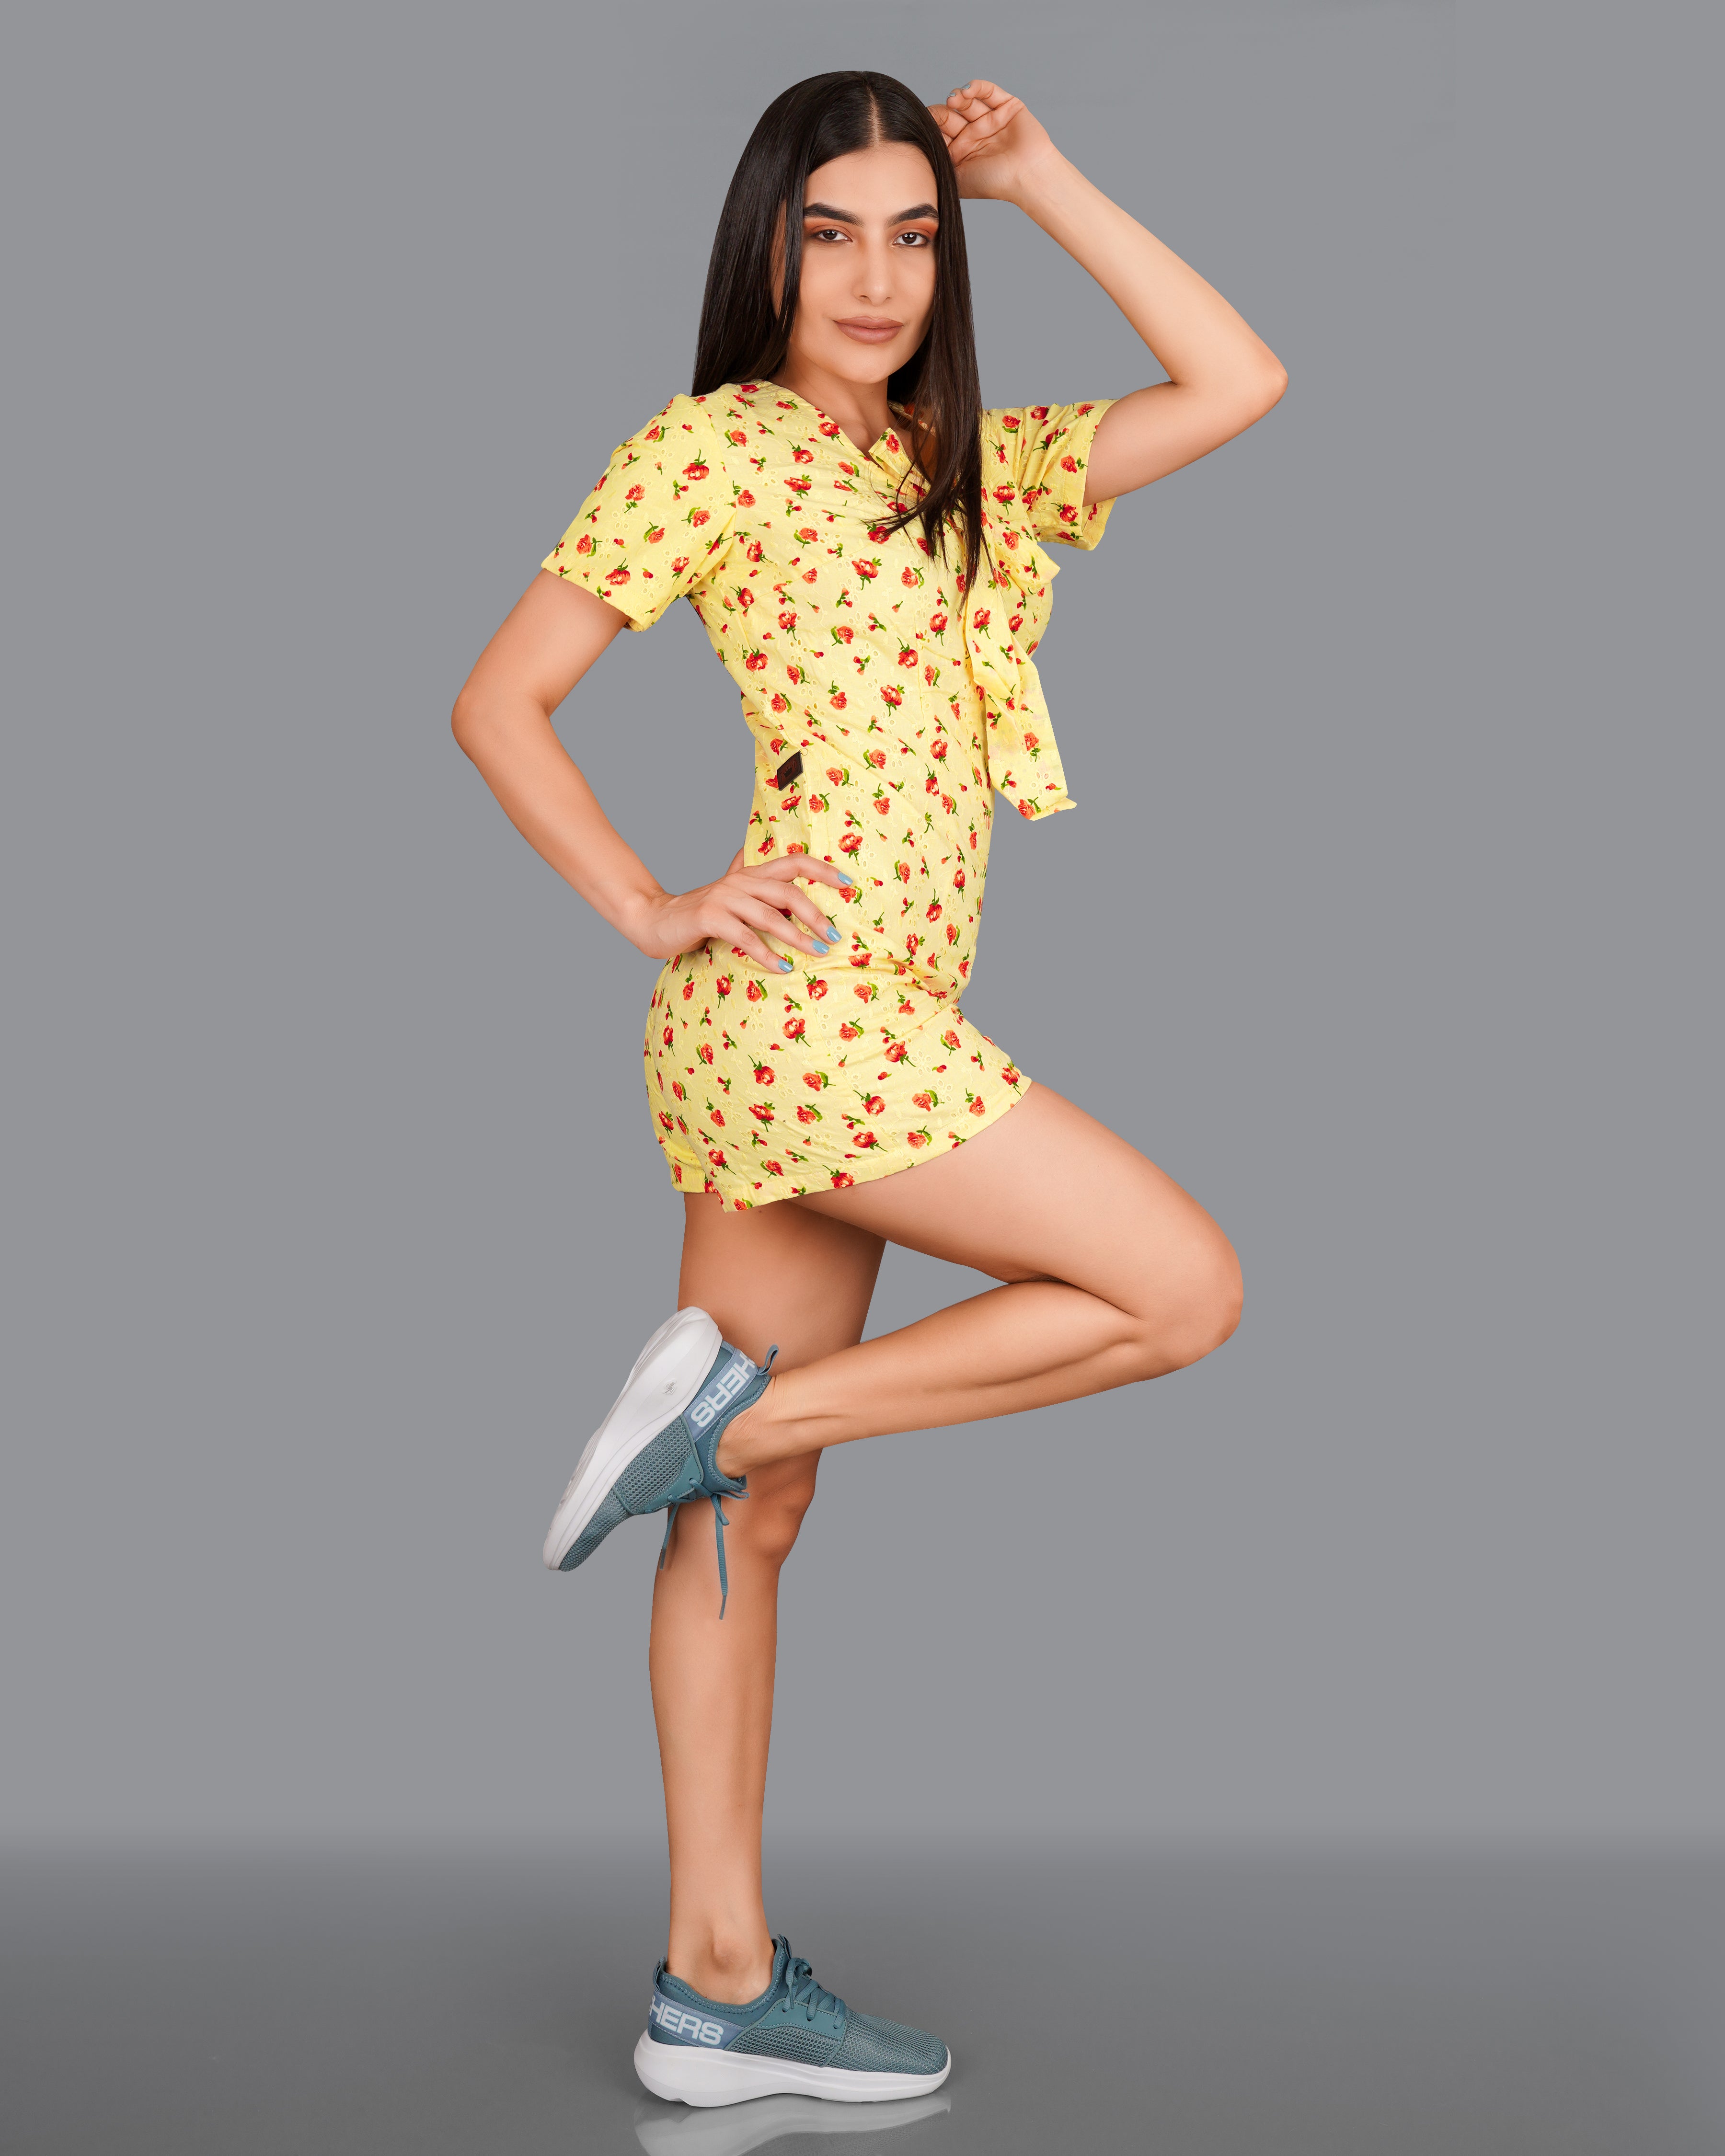 Kournikova Yellow Rose Printed Premium Cotton Jumpsuit WD005-32, WD005-34, WD005-36, WD005-38, WD005-40, WD005-42